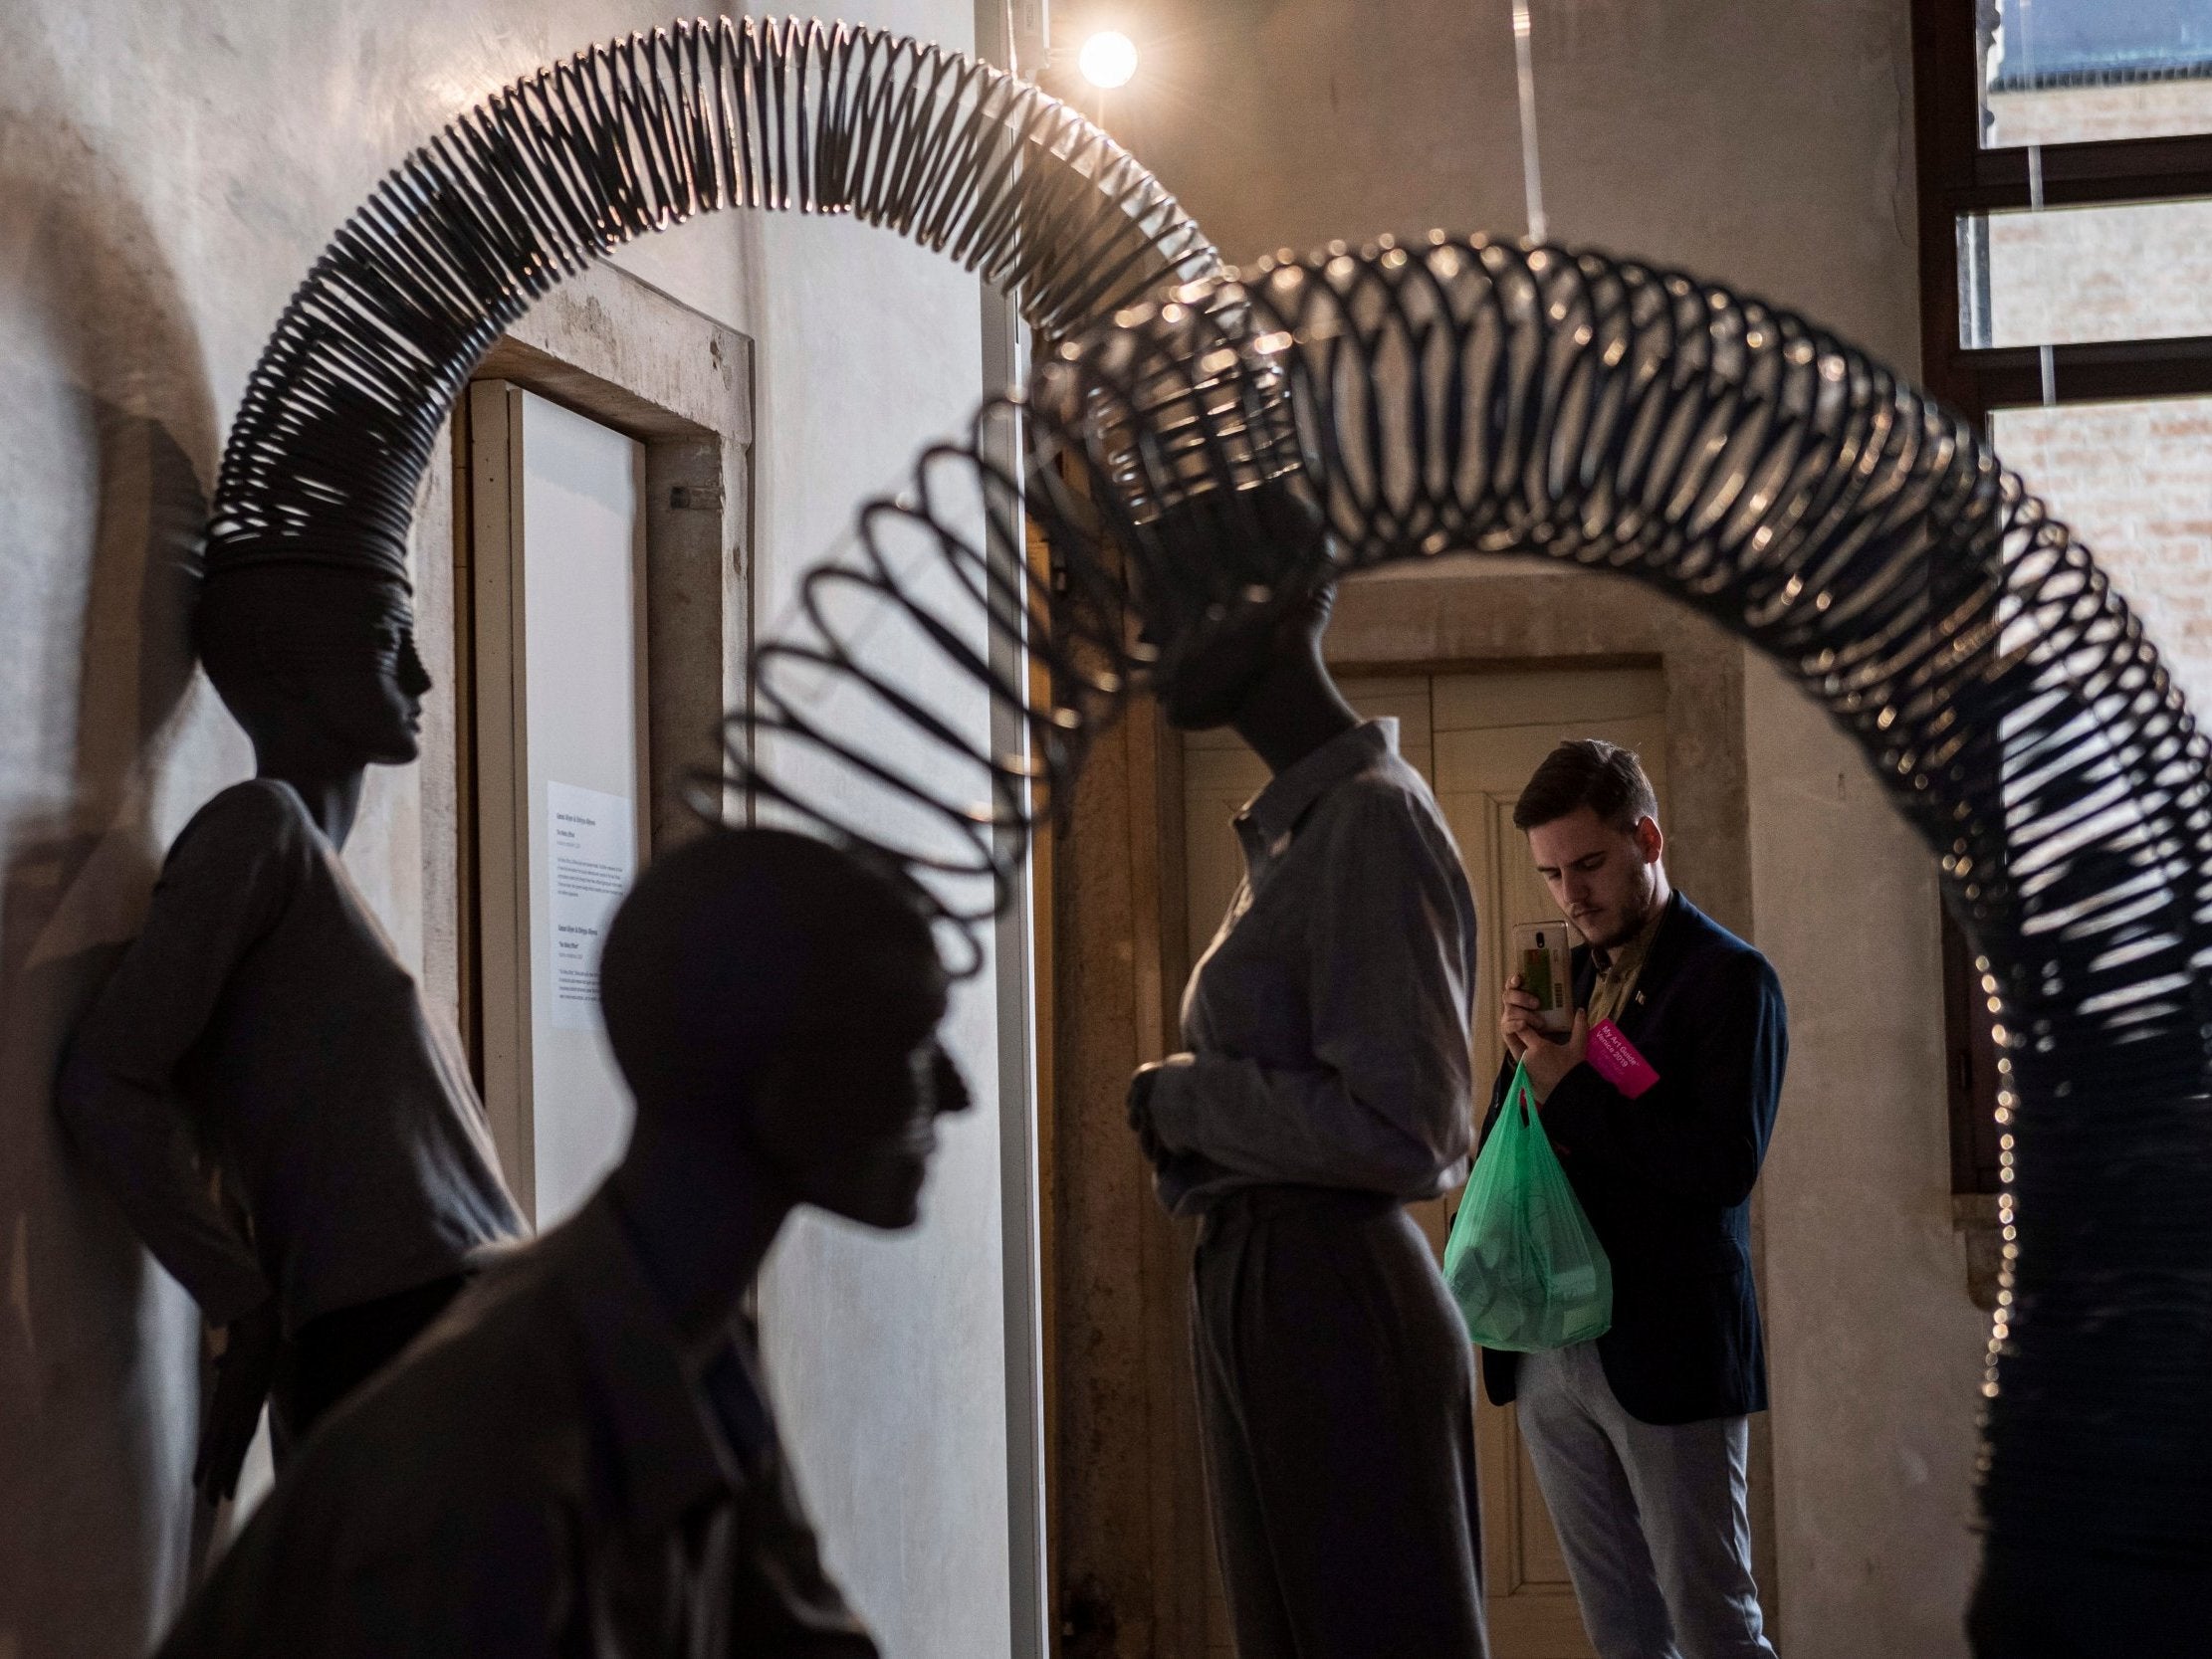 ‘The Slinky Effect’ by Azeri artists Kanan Aliyev and Ulviyya Aliyeva